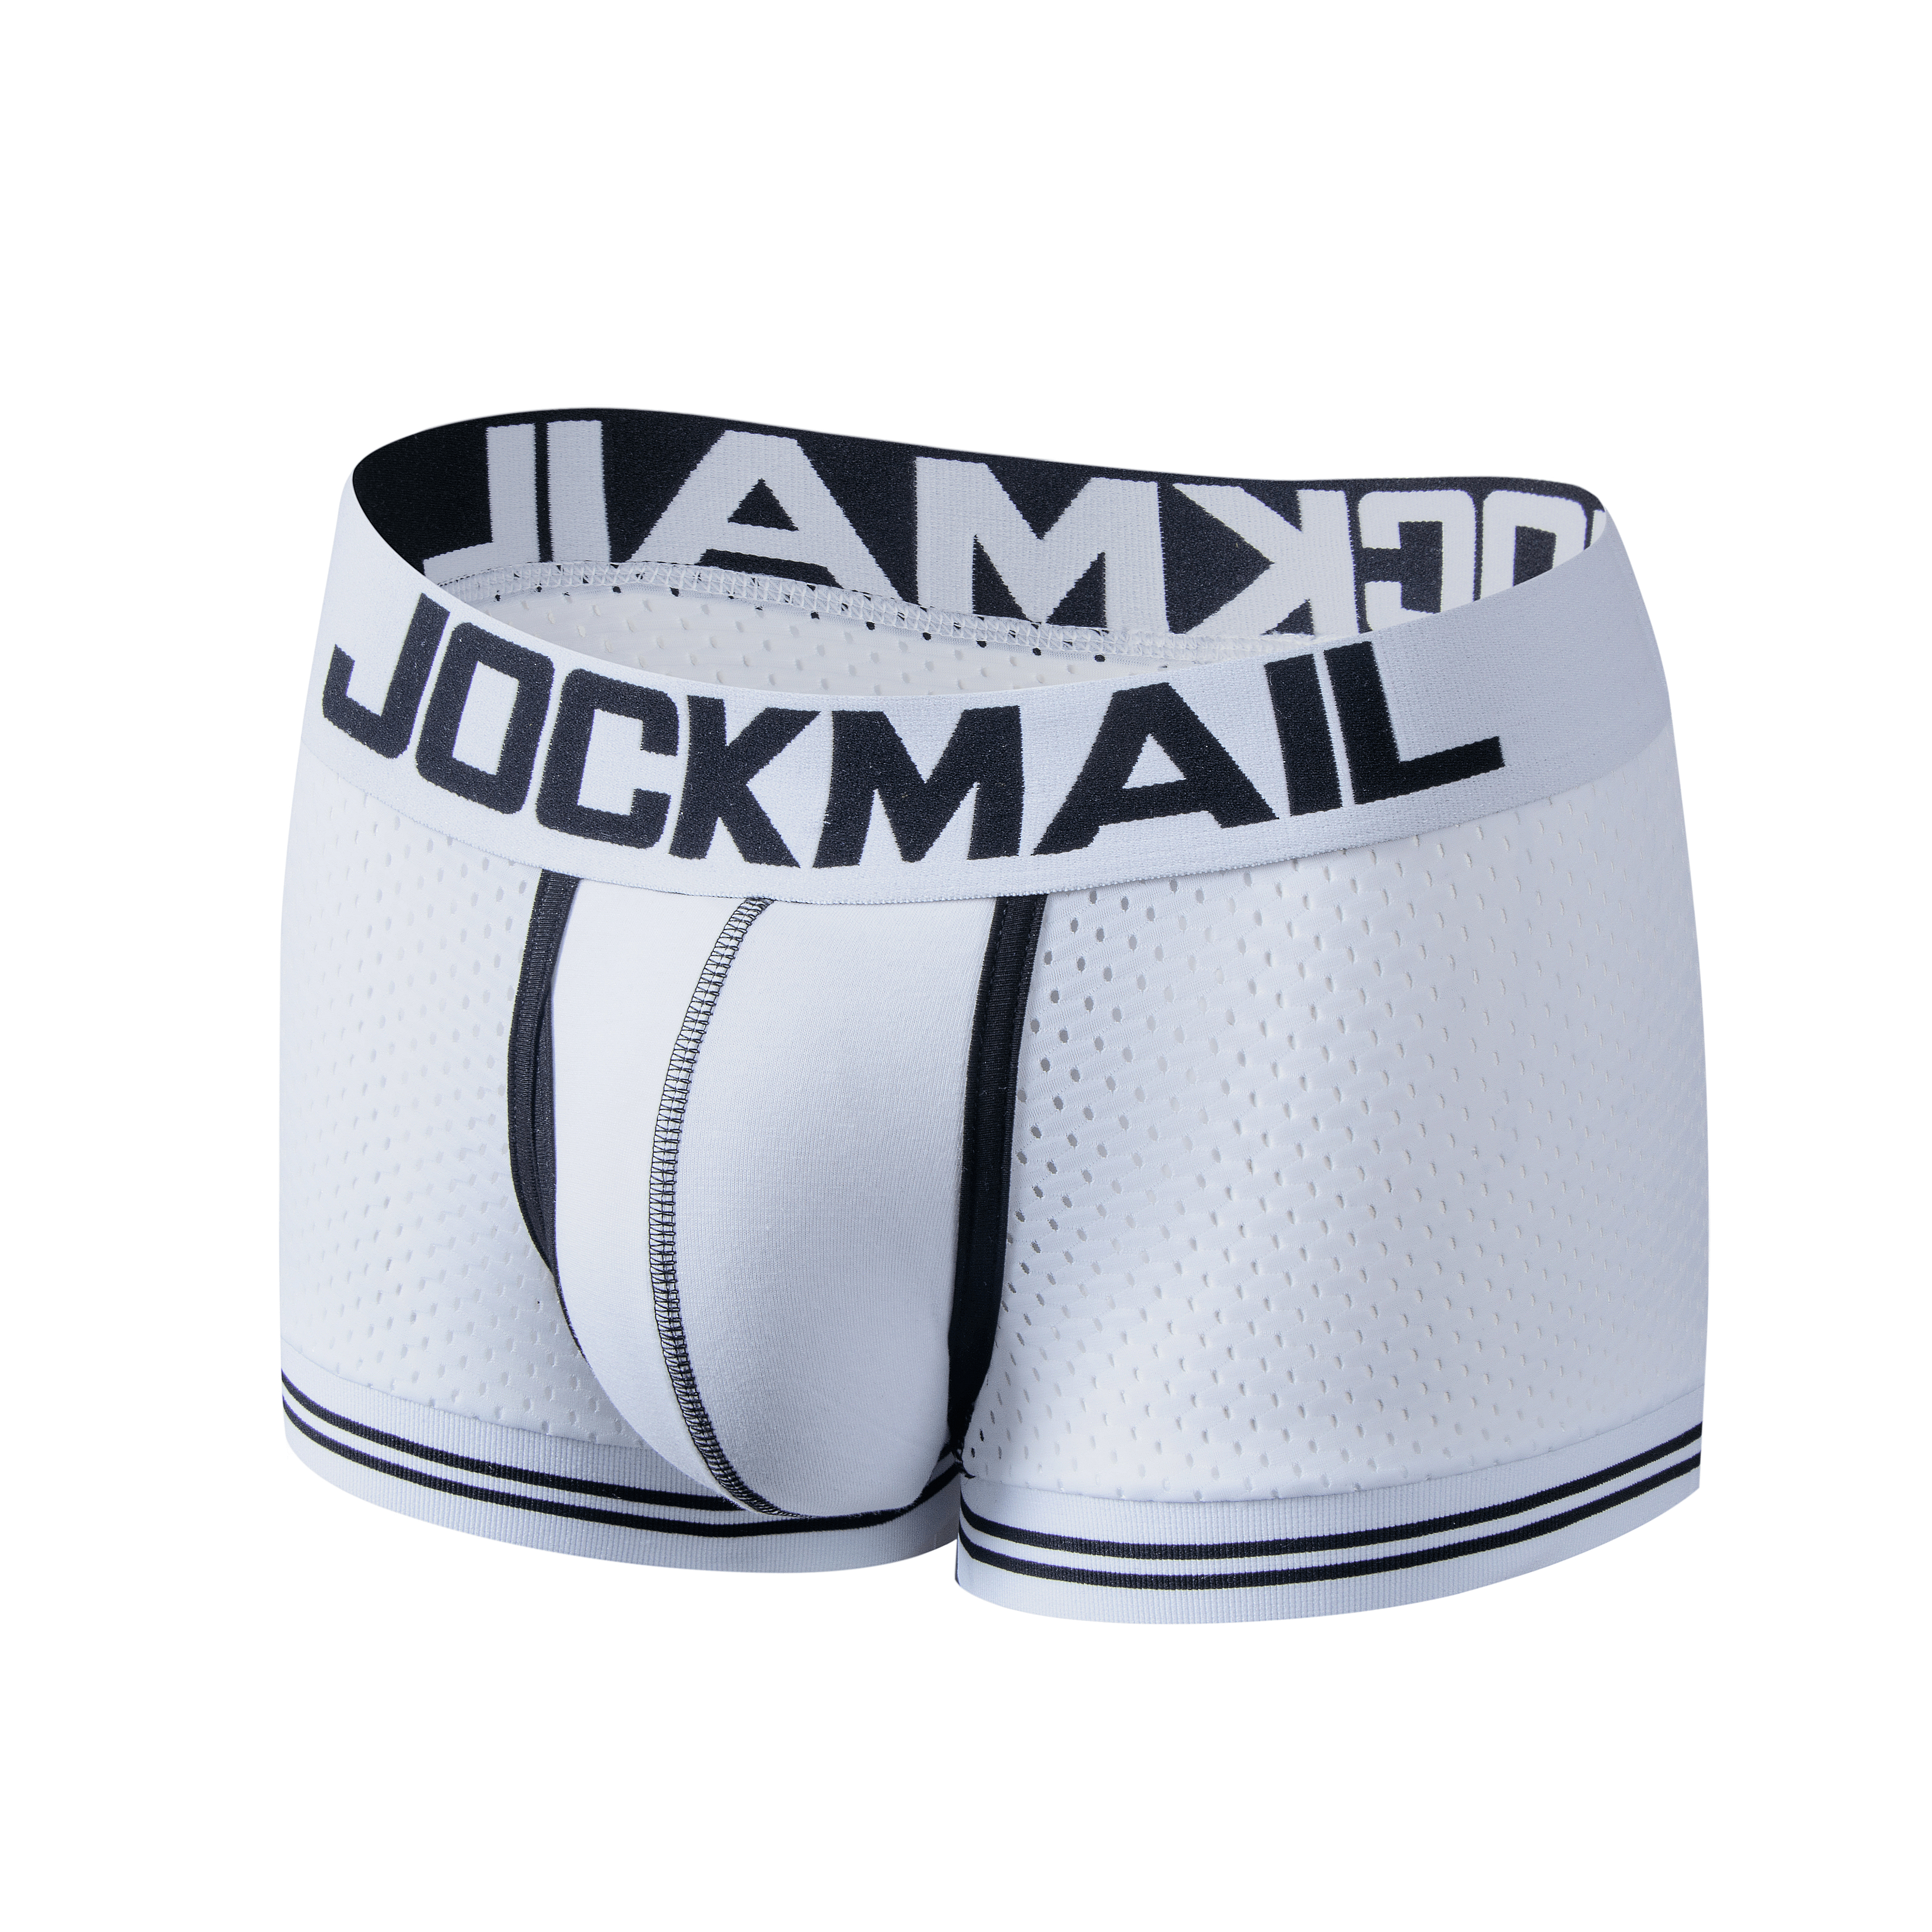 Boxer da uomo JOCKMAIL JM412 - Nero